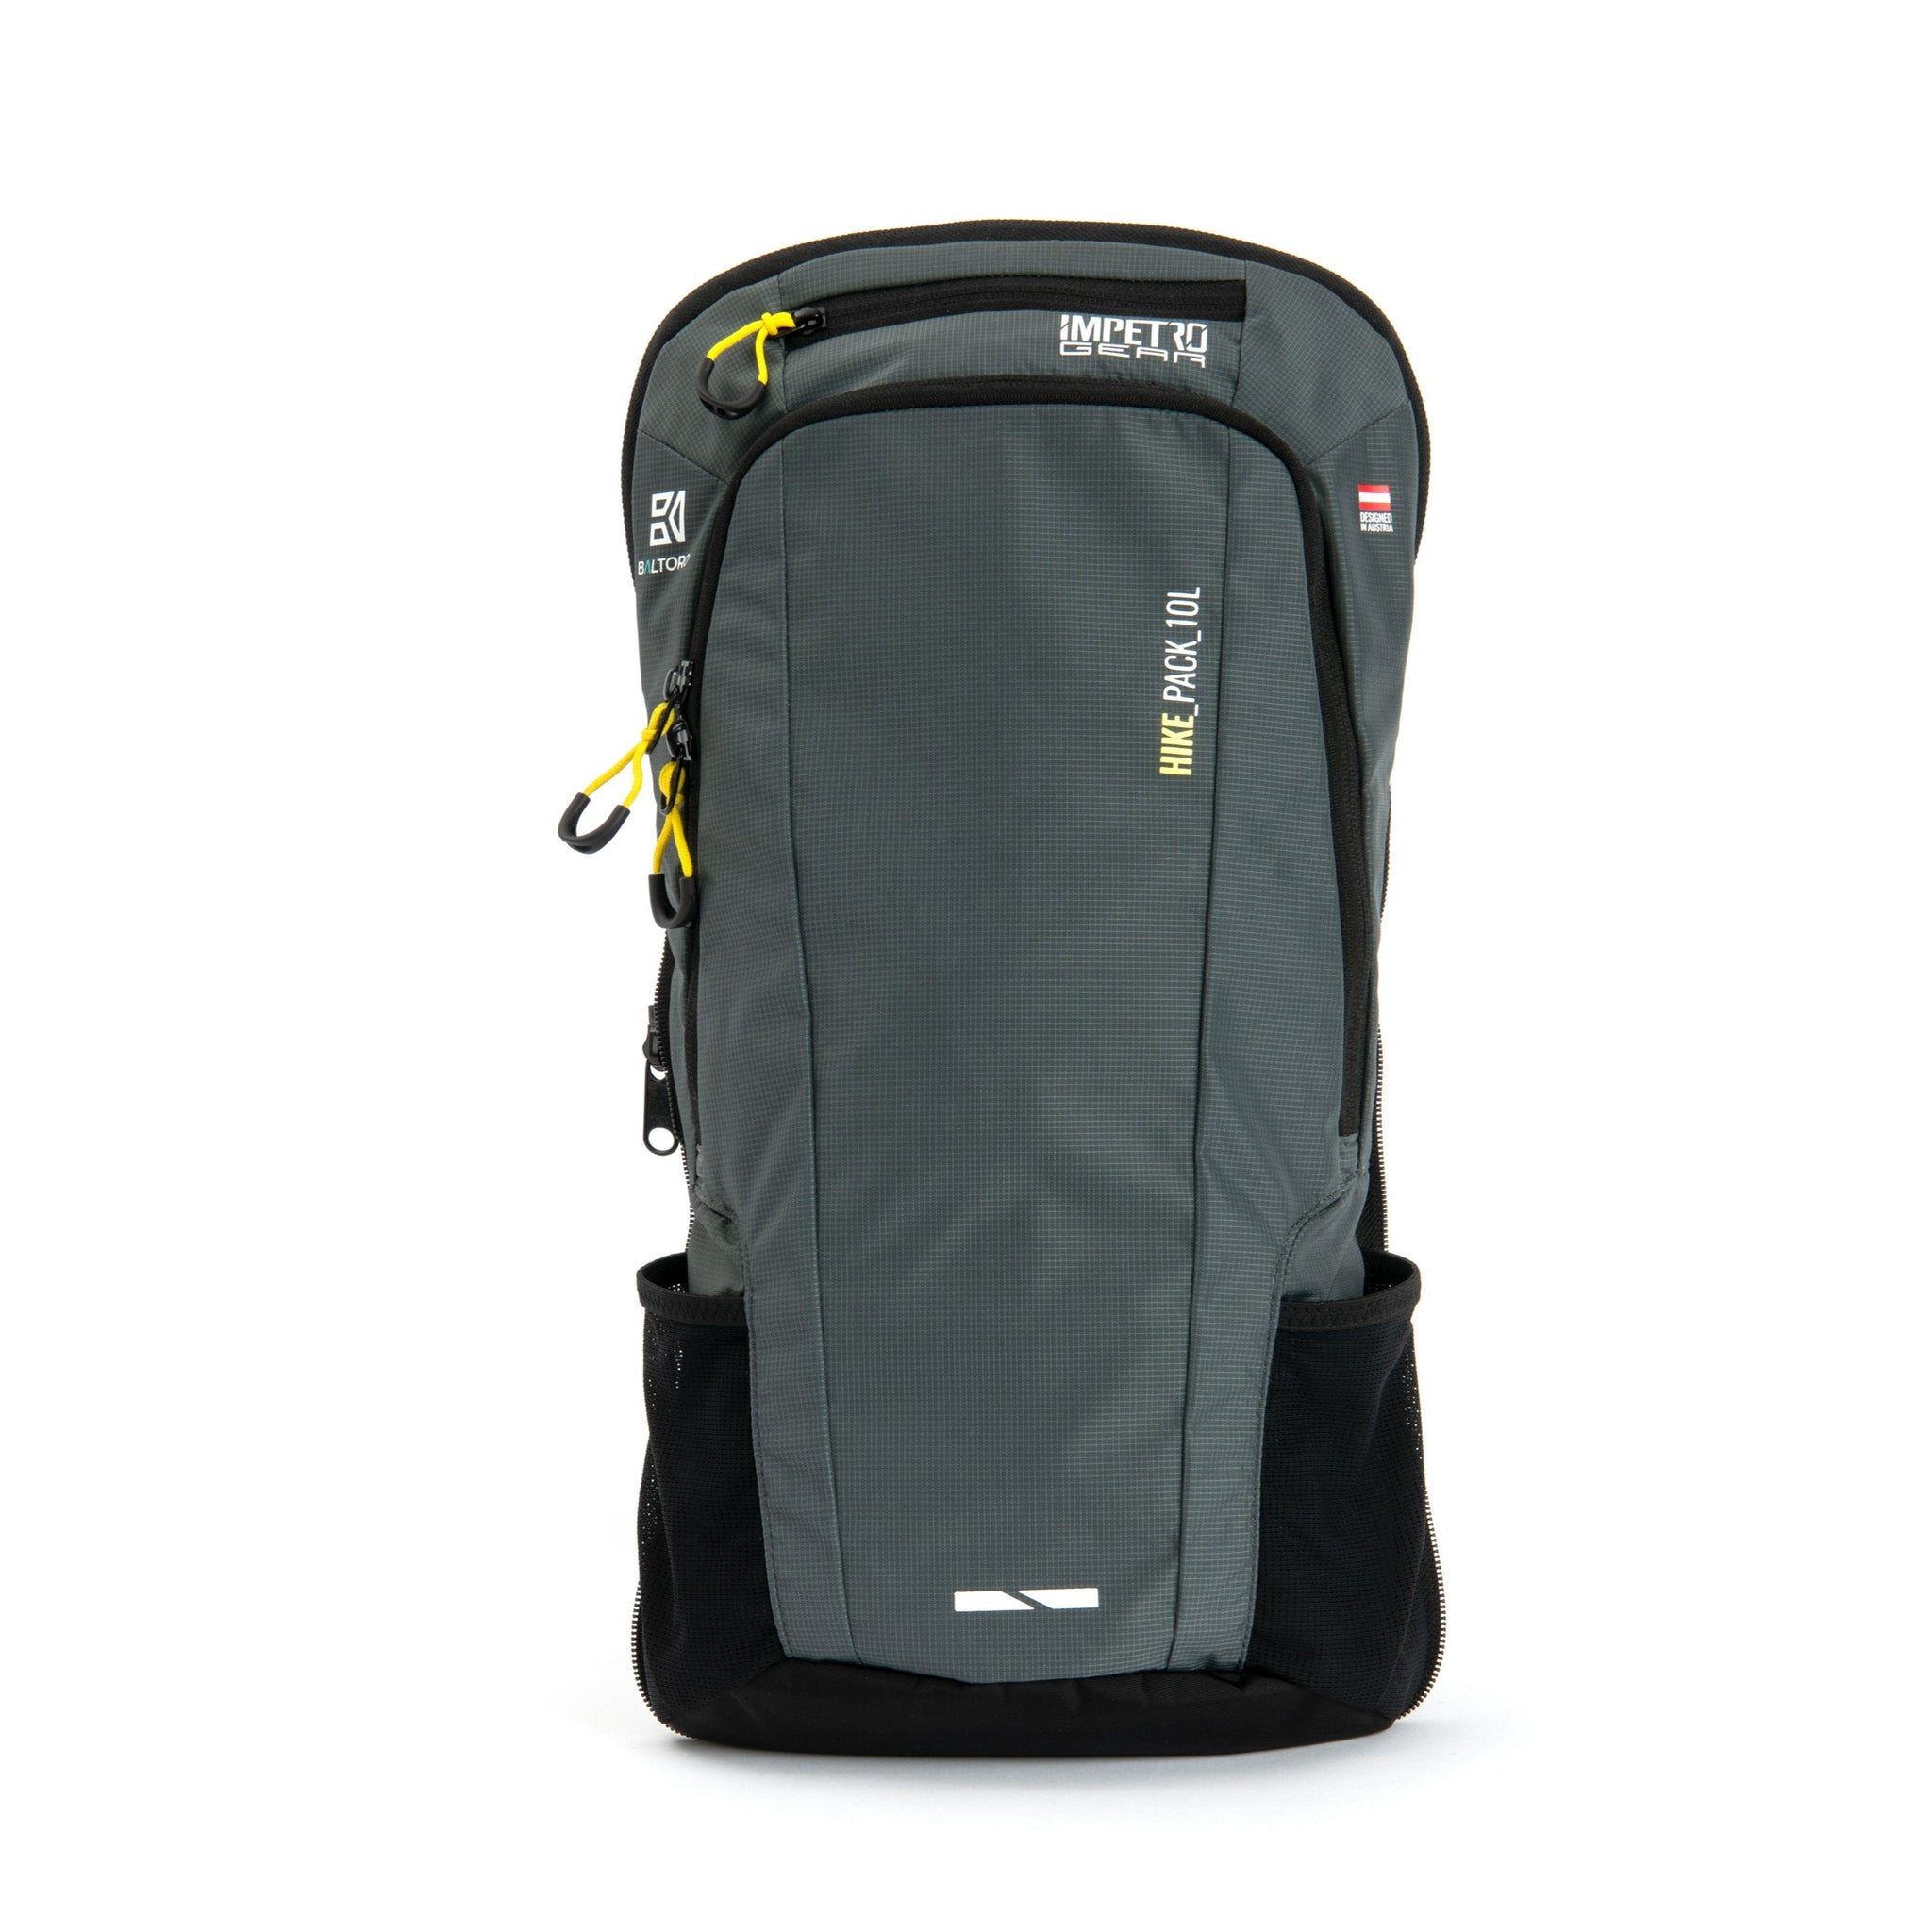 Duo Bundle (choice of 2 backpacks)